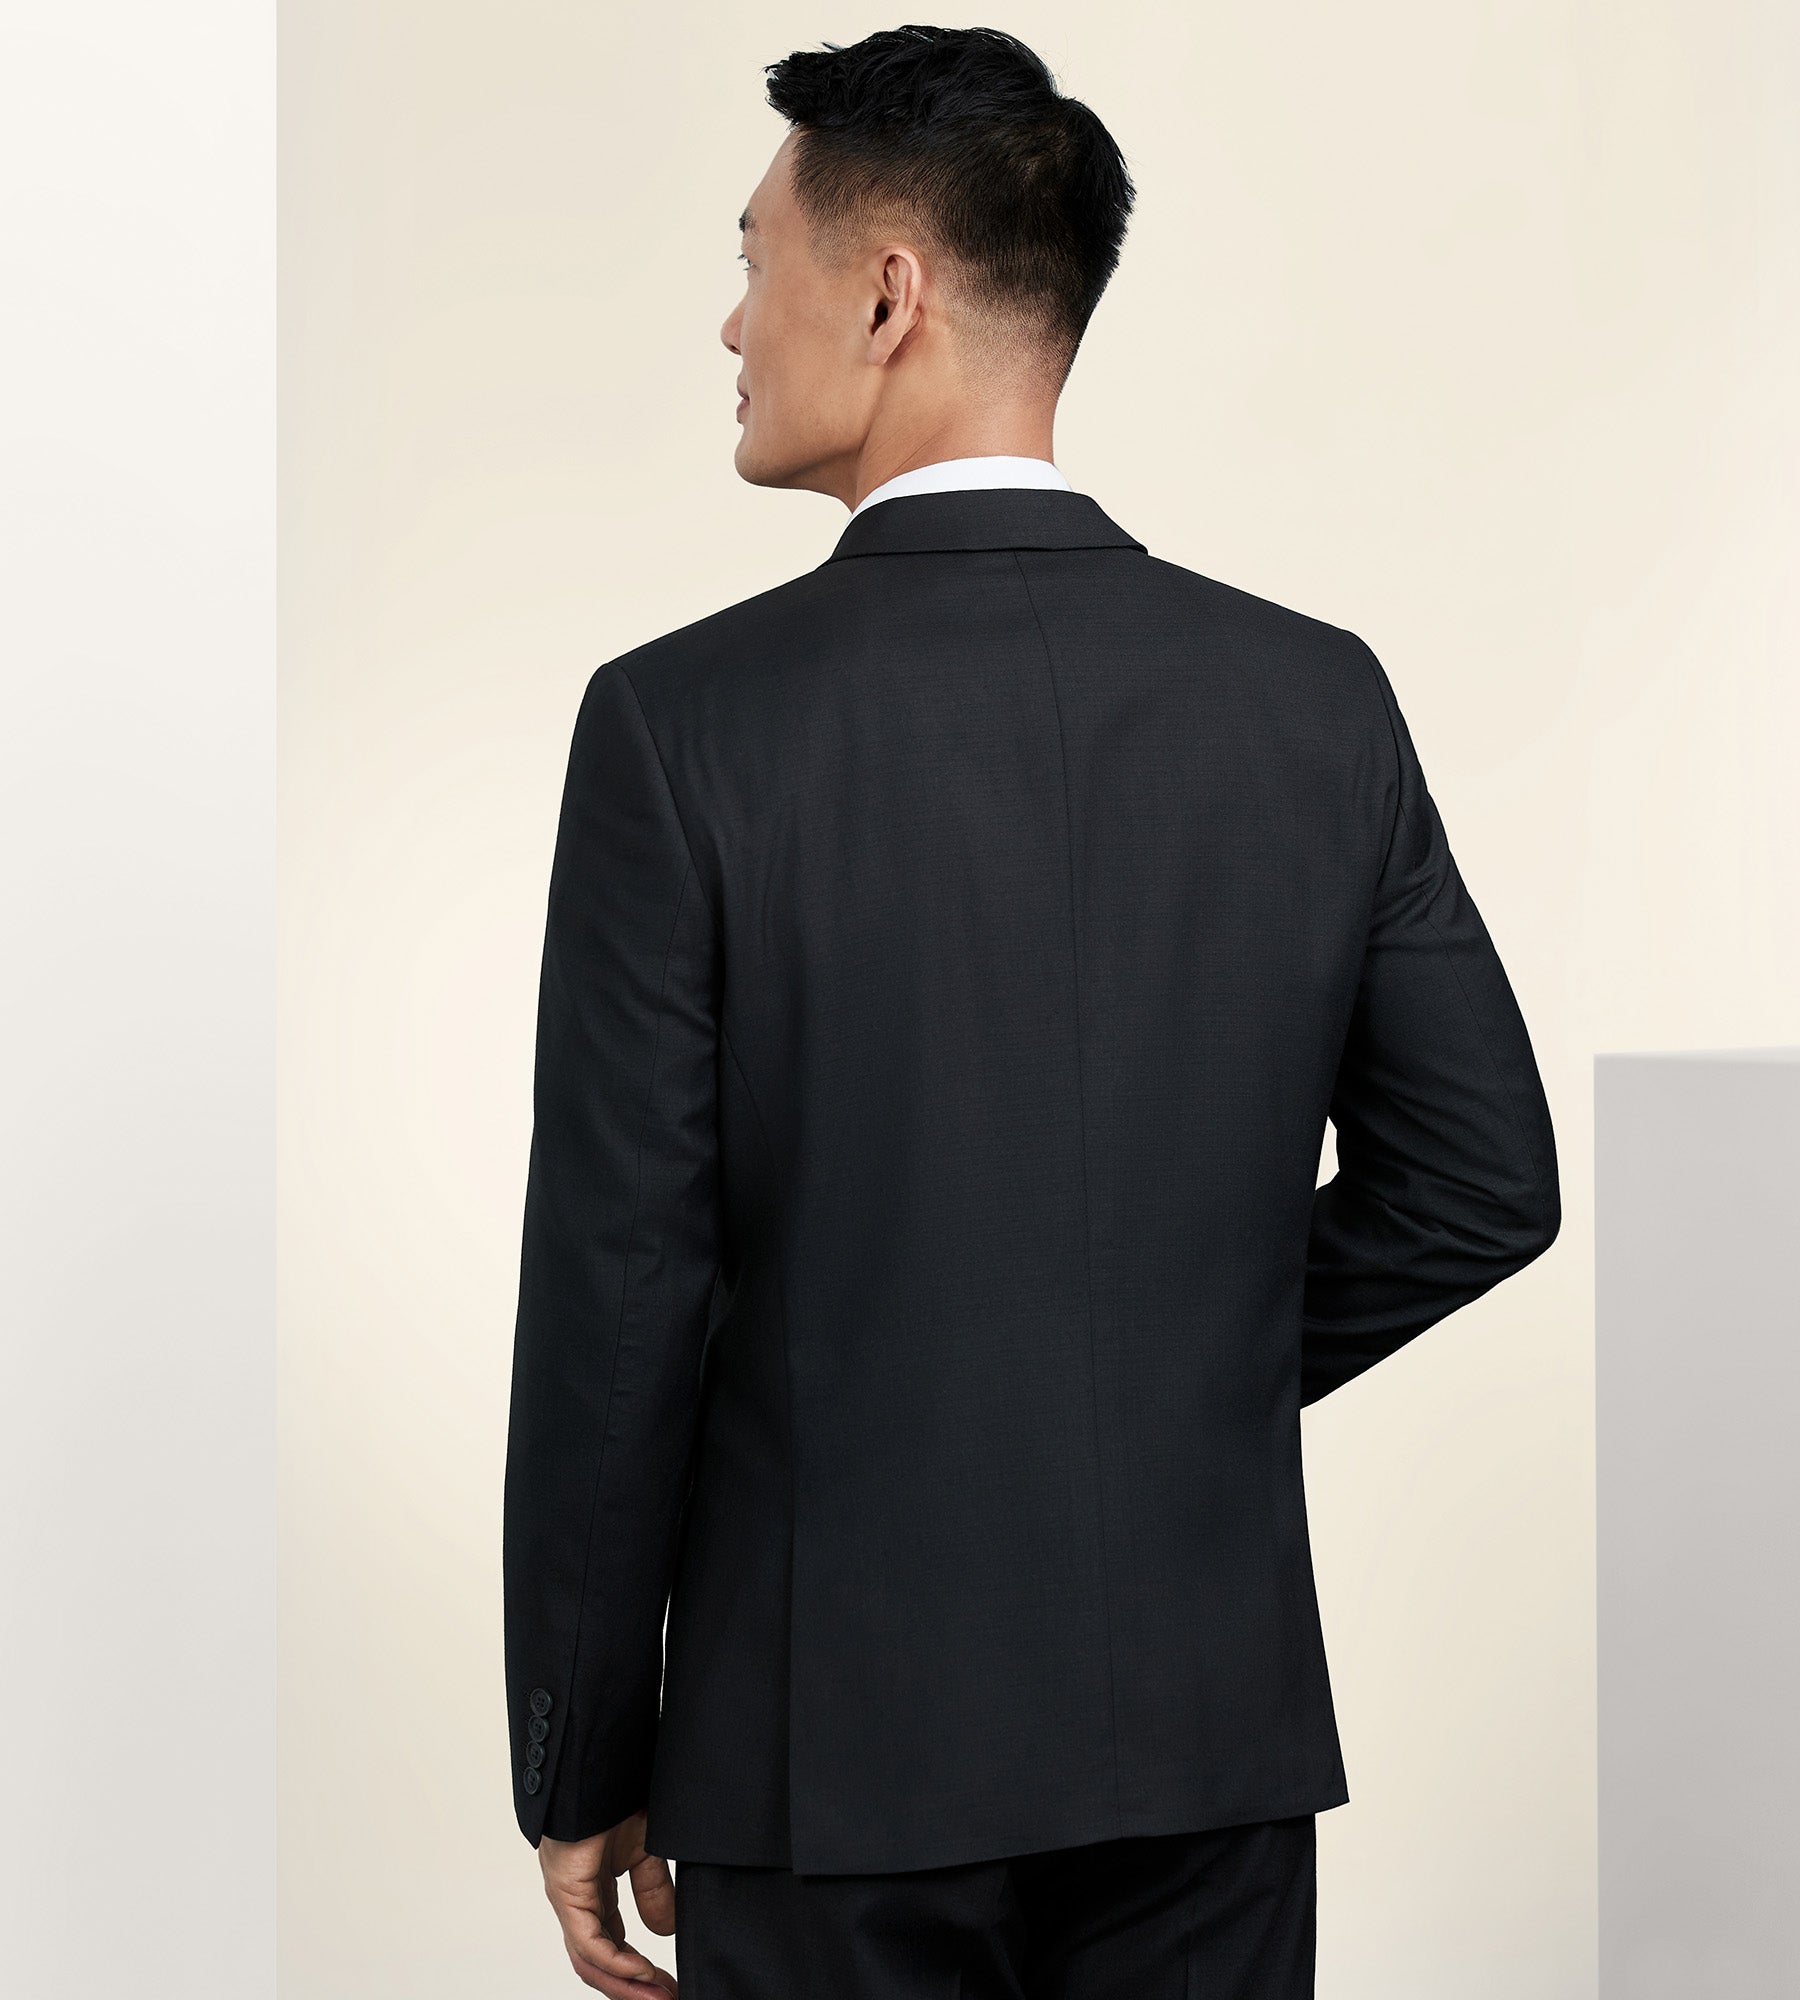 Slim Fit Stretch Suit Separate Jacket – Tip Top